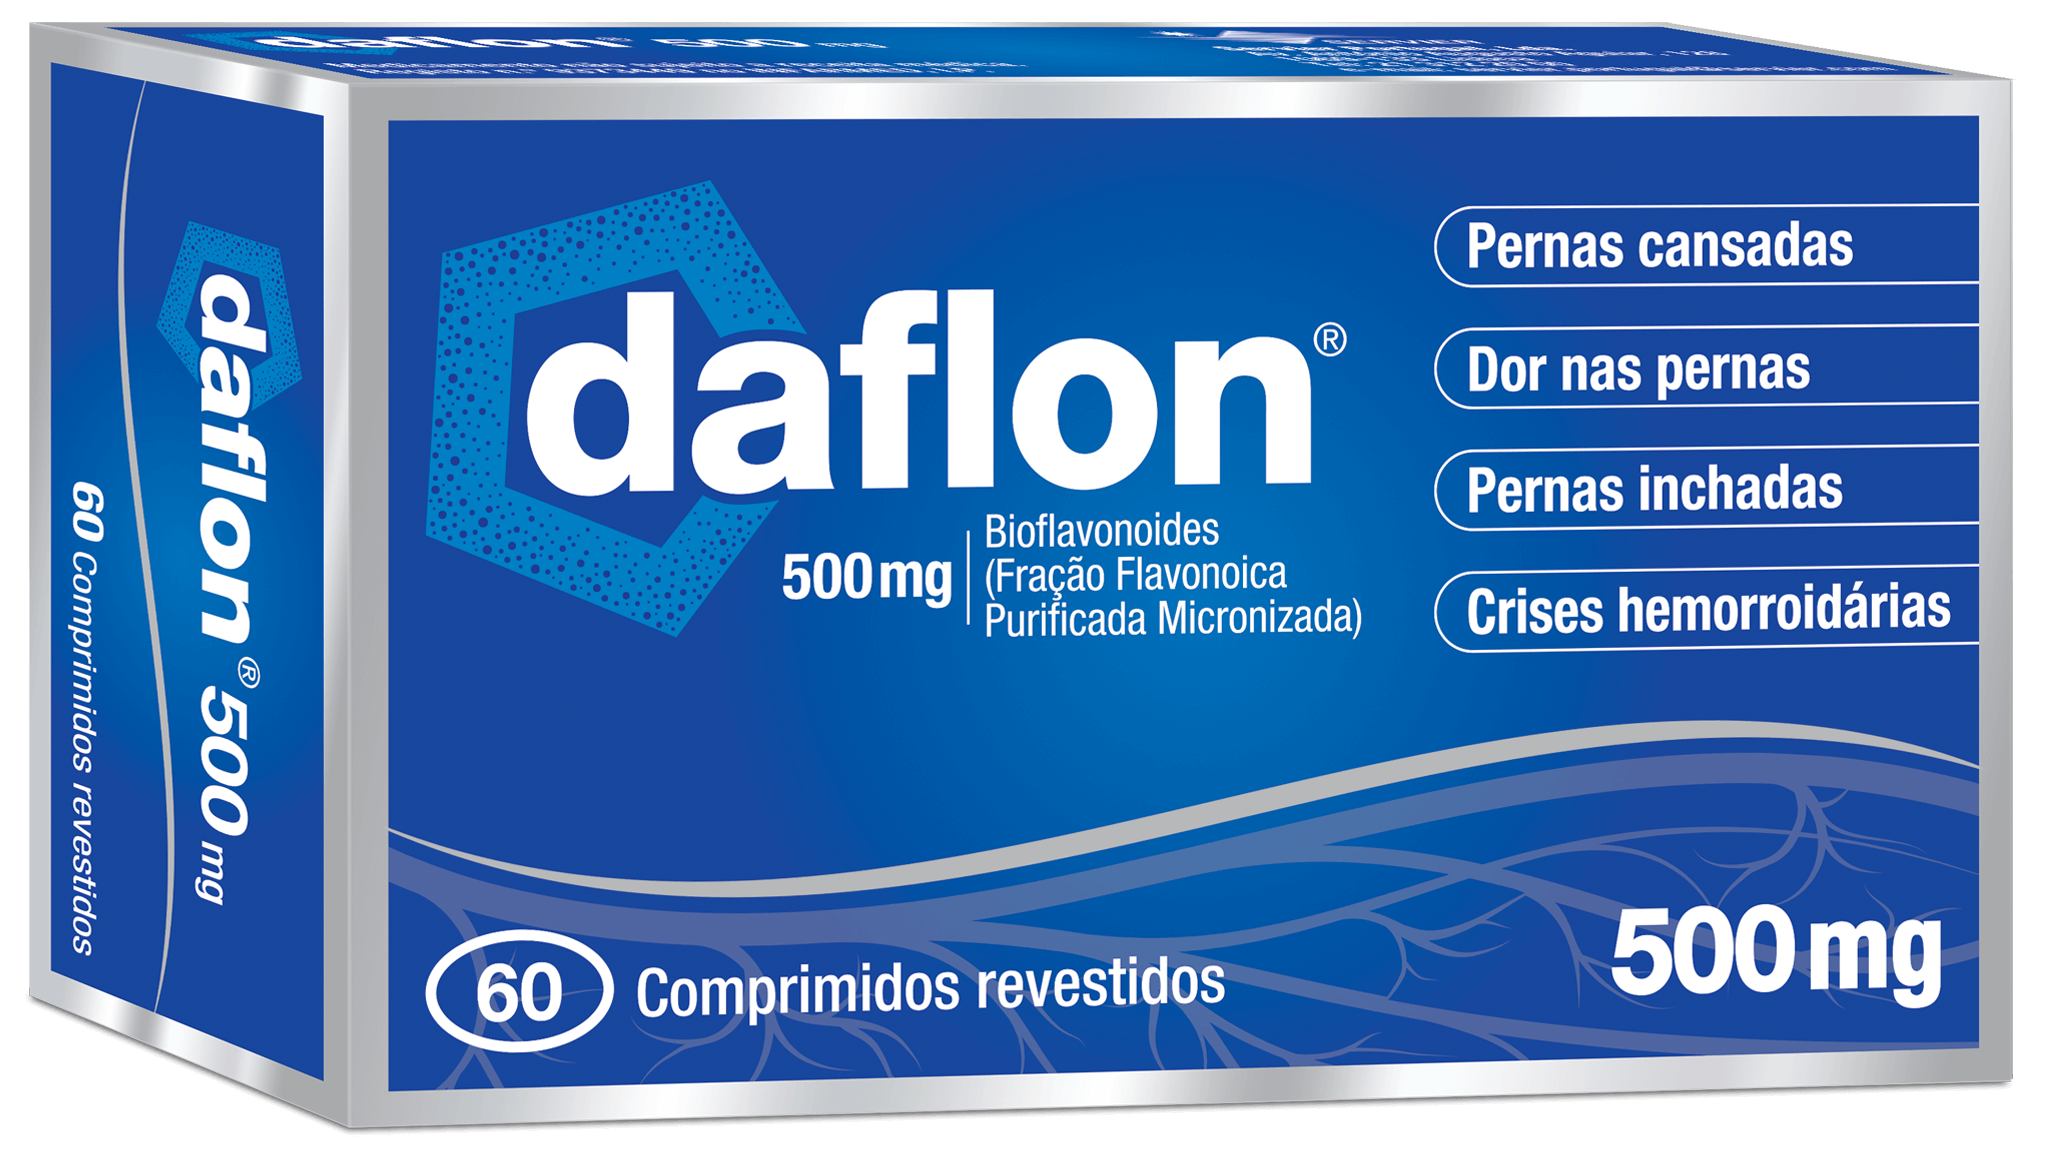 Daflon 1000 – Portal do Médico Servier